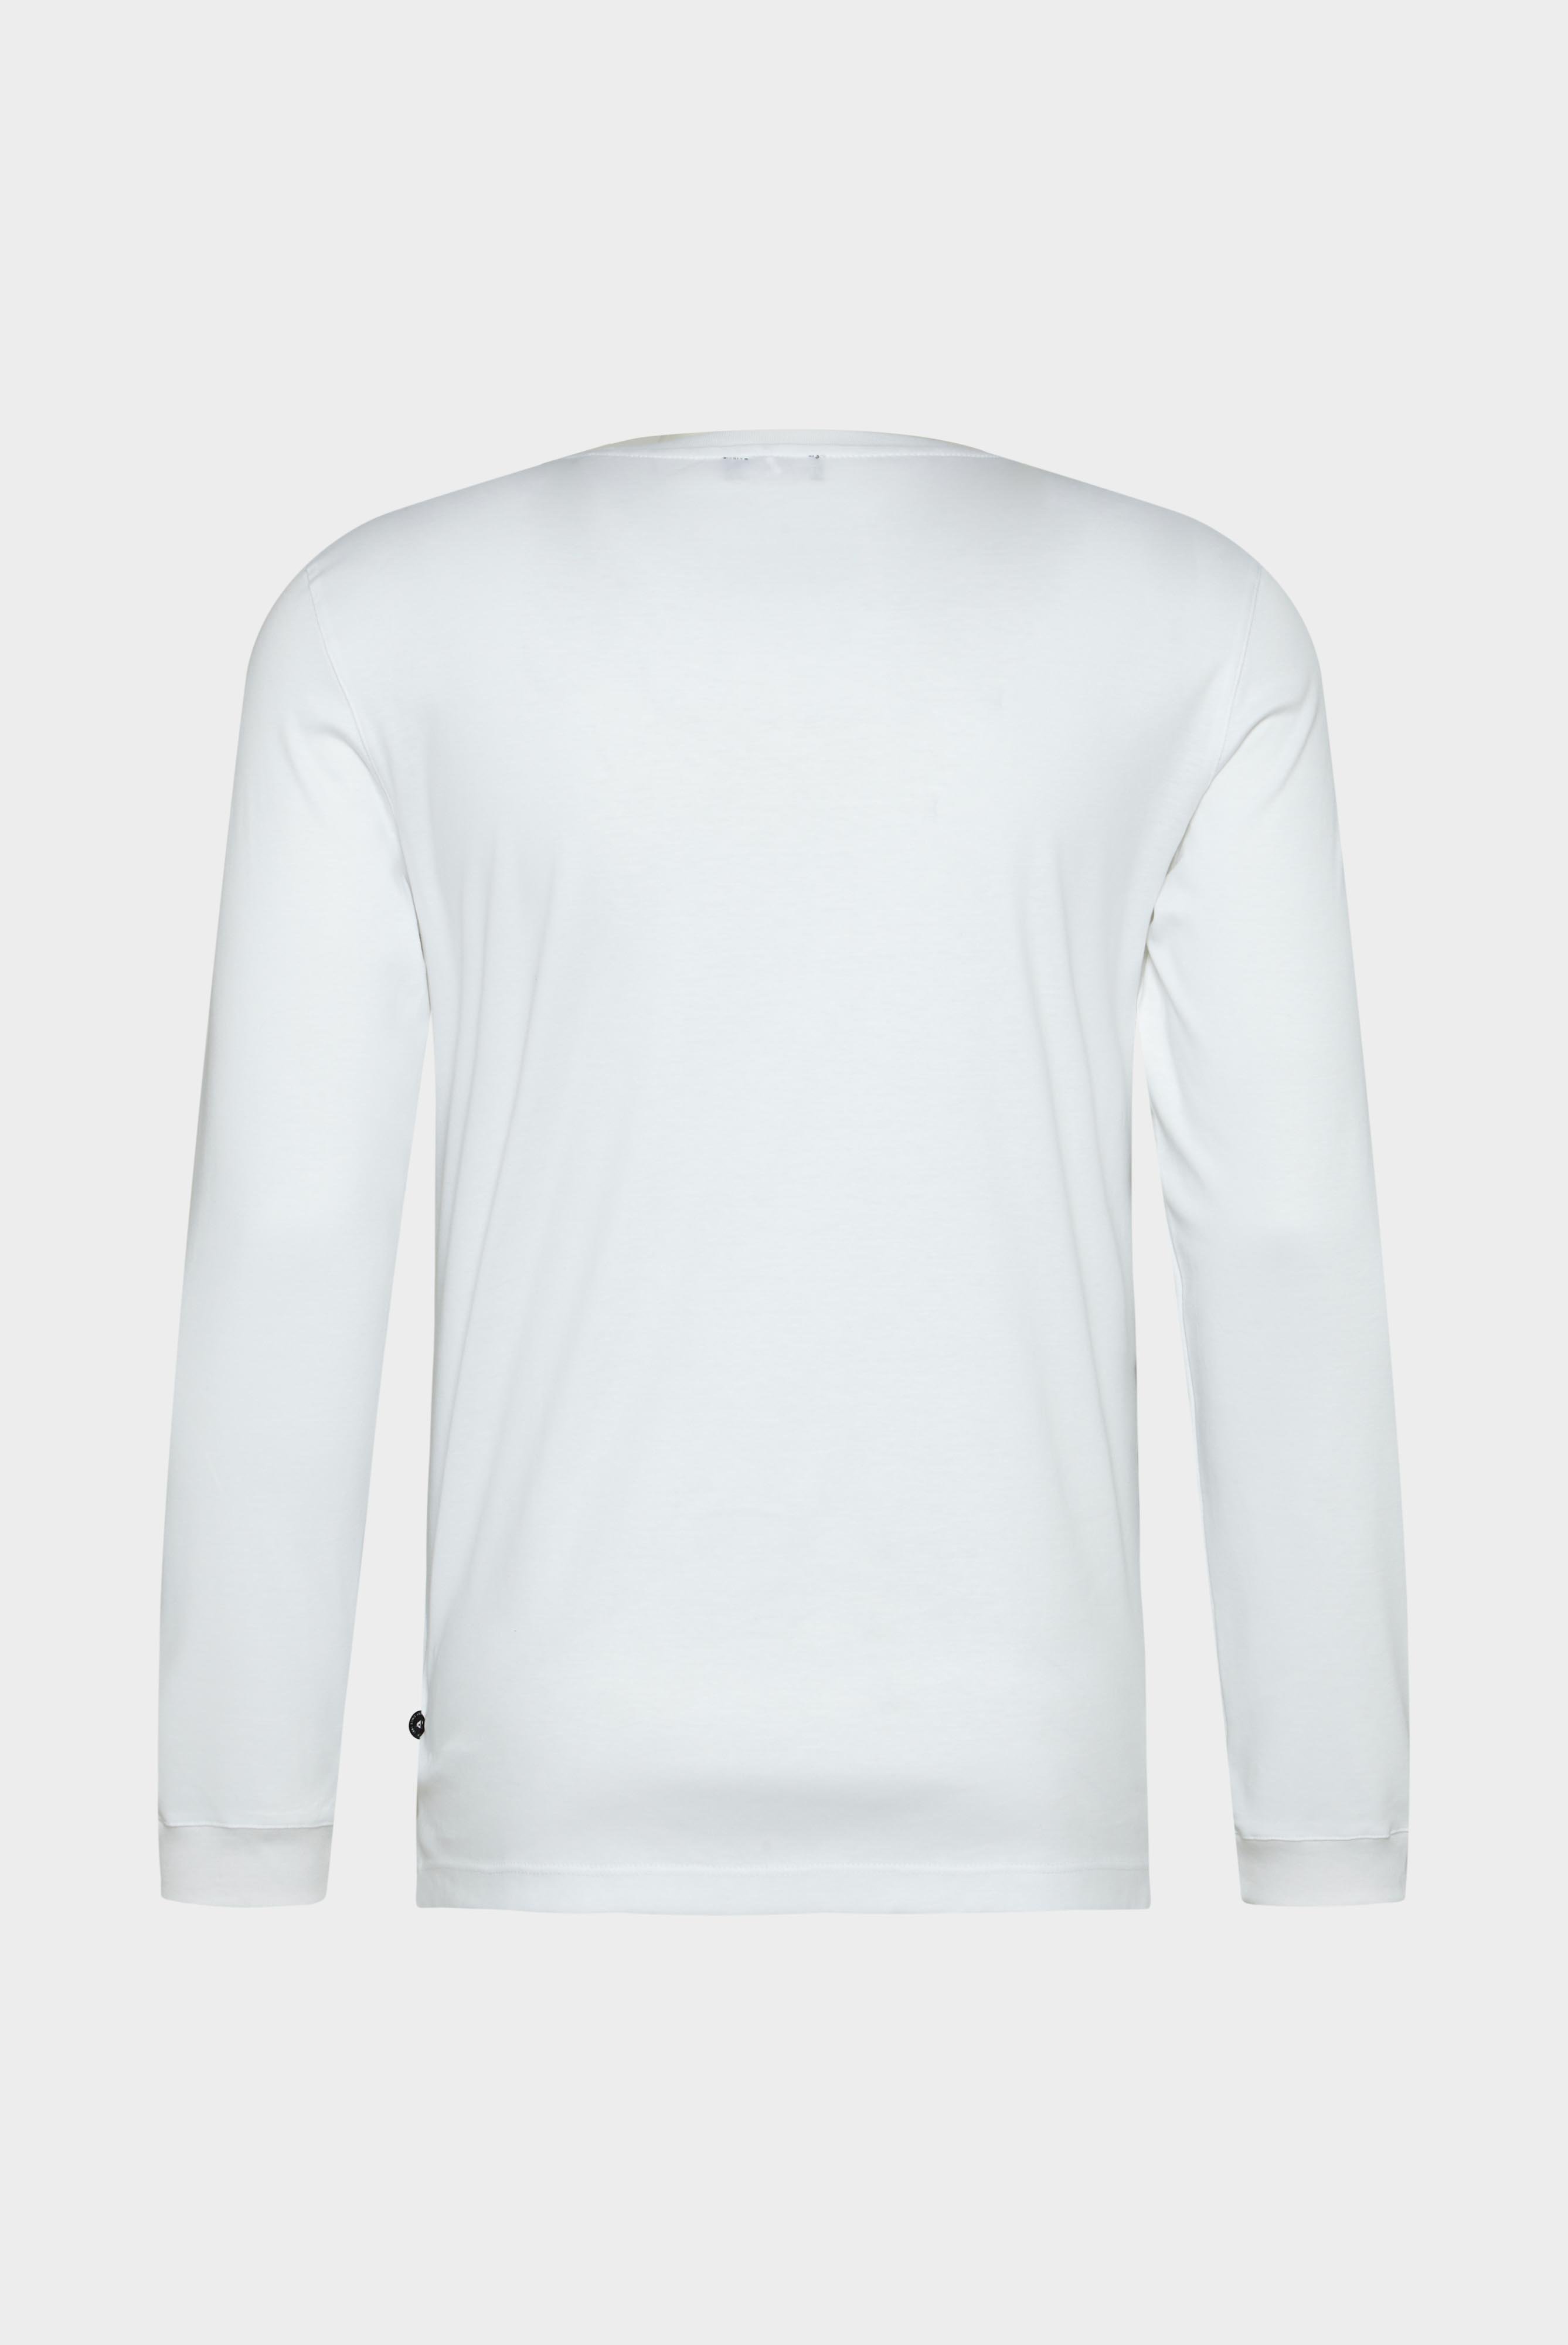 T-Shirts+Langarm Jersey T-Shirt mit Rundhals Slim Fit+20.1718.UX.180031.000.M